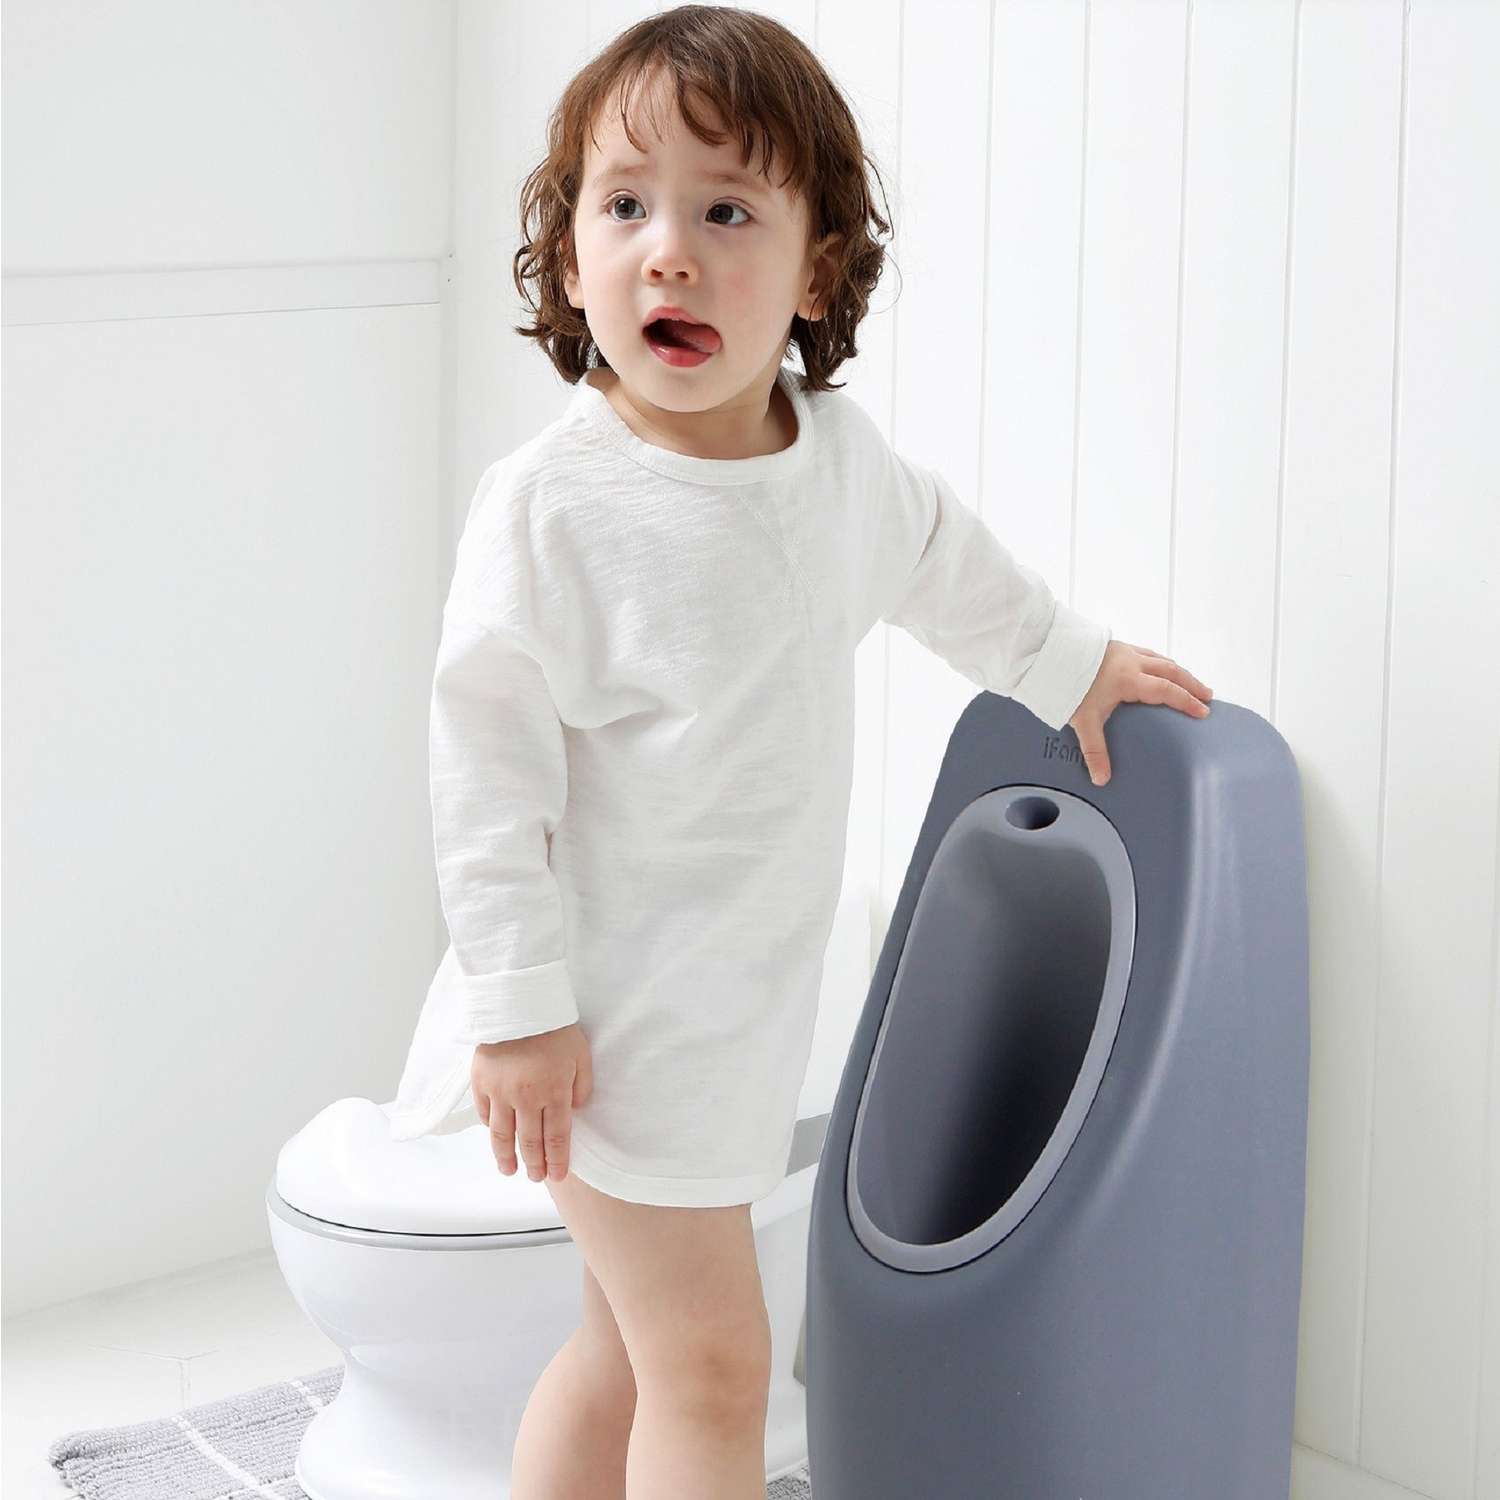 Детский горшок писсуар Ifam Easy doing standing urinal bowl - фото 6